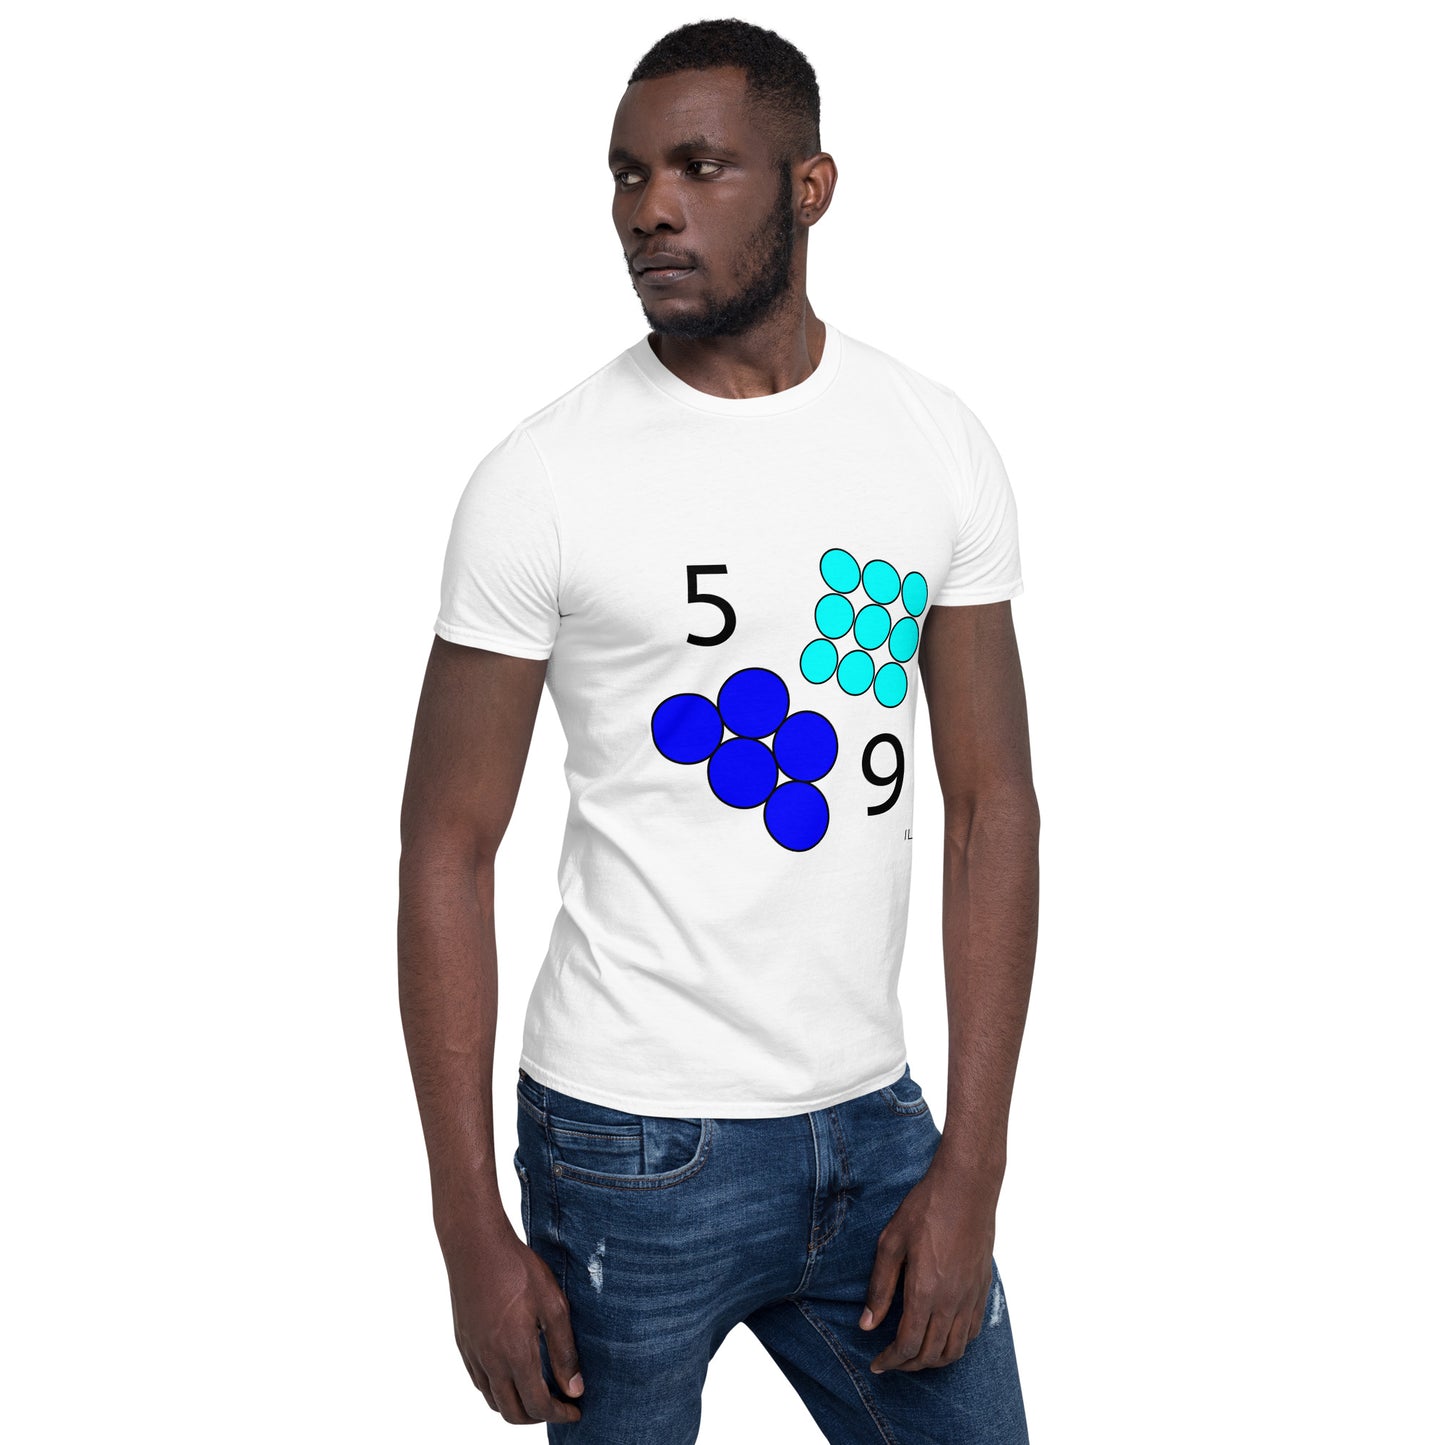 #0509 A Blue May 9th Short-Sleeve Unisex T-Shirt - -Lighten Your Life [ItsAboutTime.Life][date]